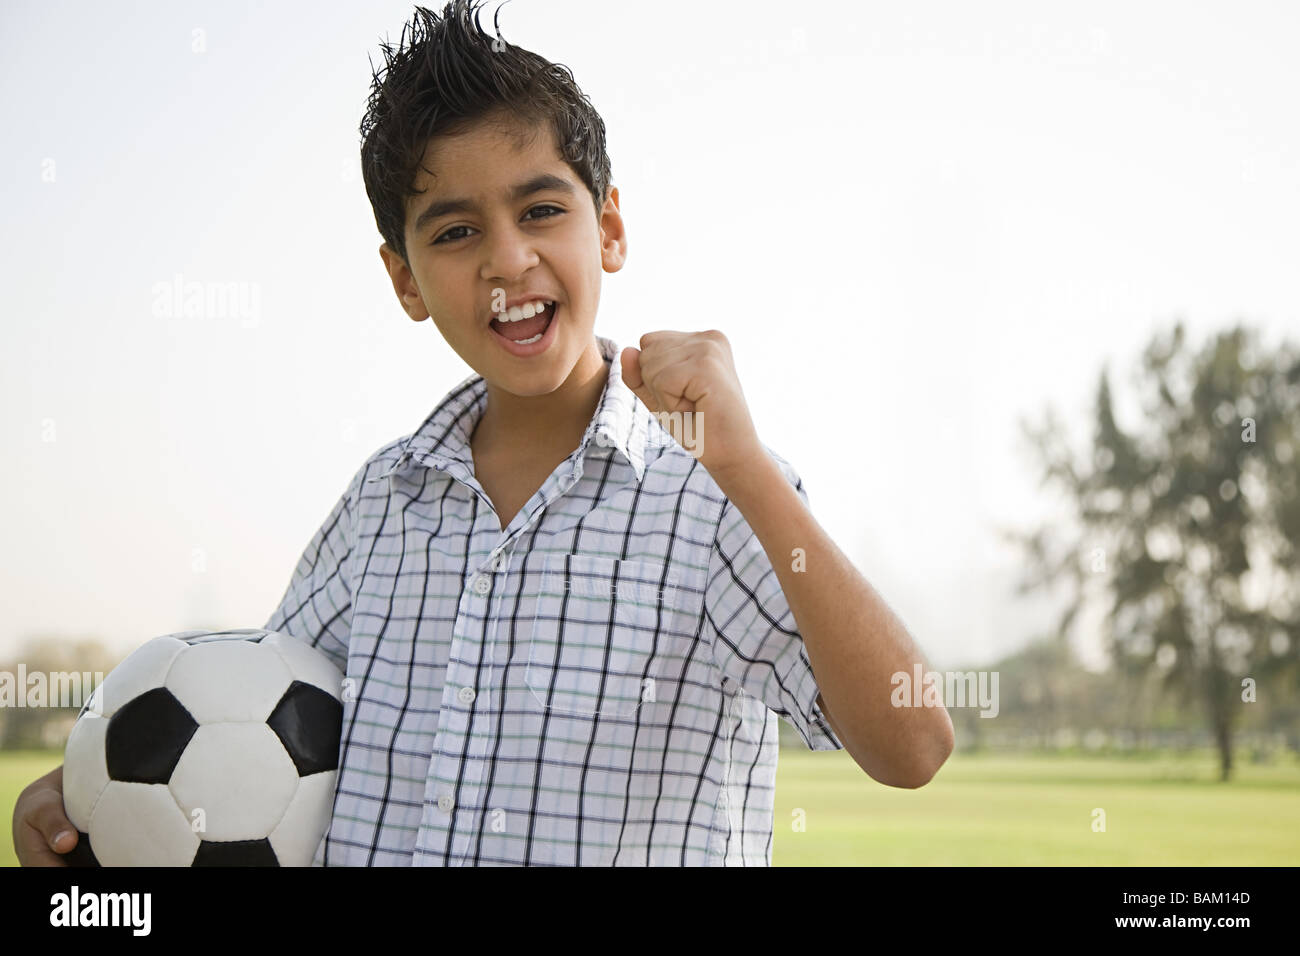 Portrait of a Boy holding a football Banque D'Images